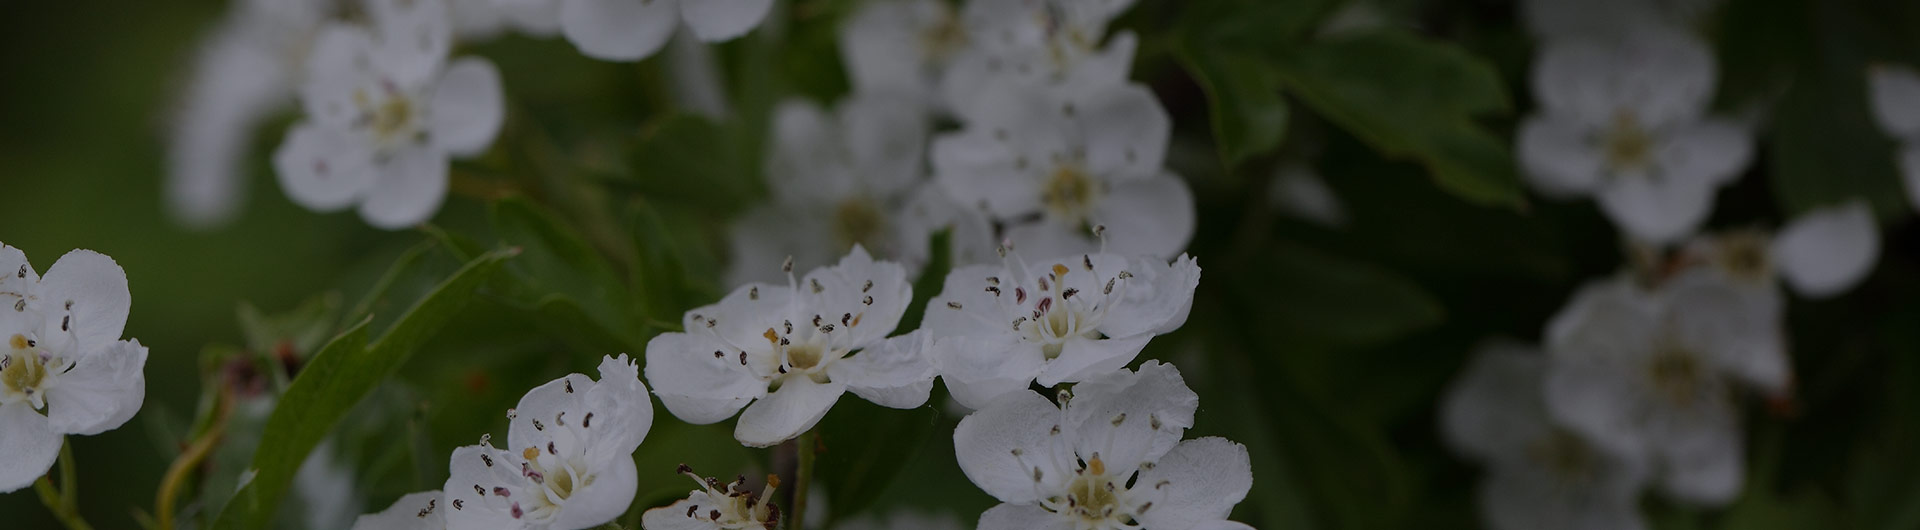 White hawthorn flowers, Missouri's state flower.